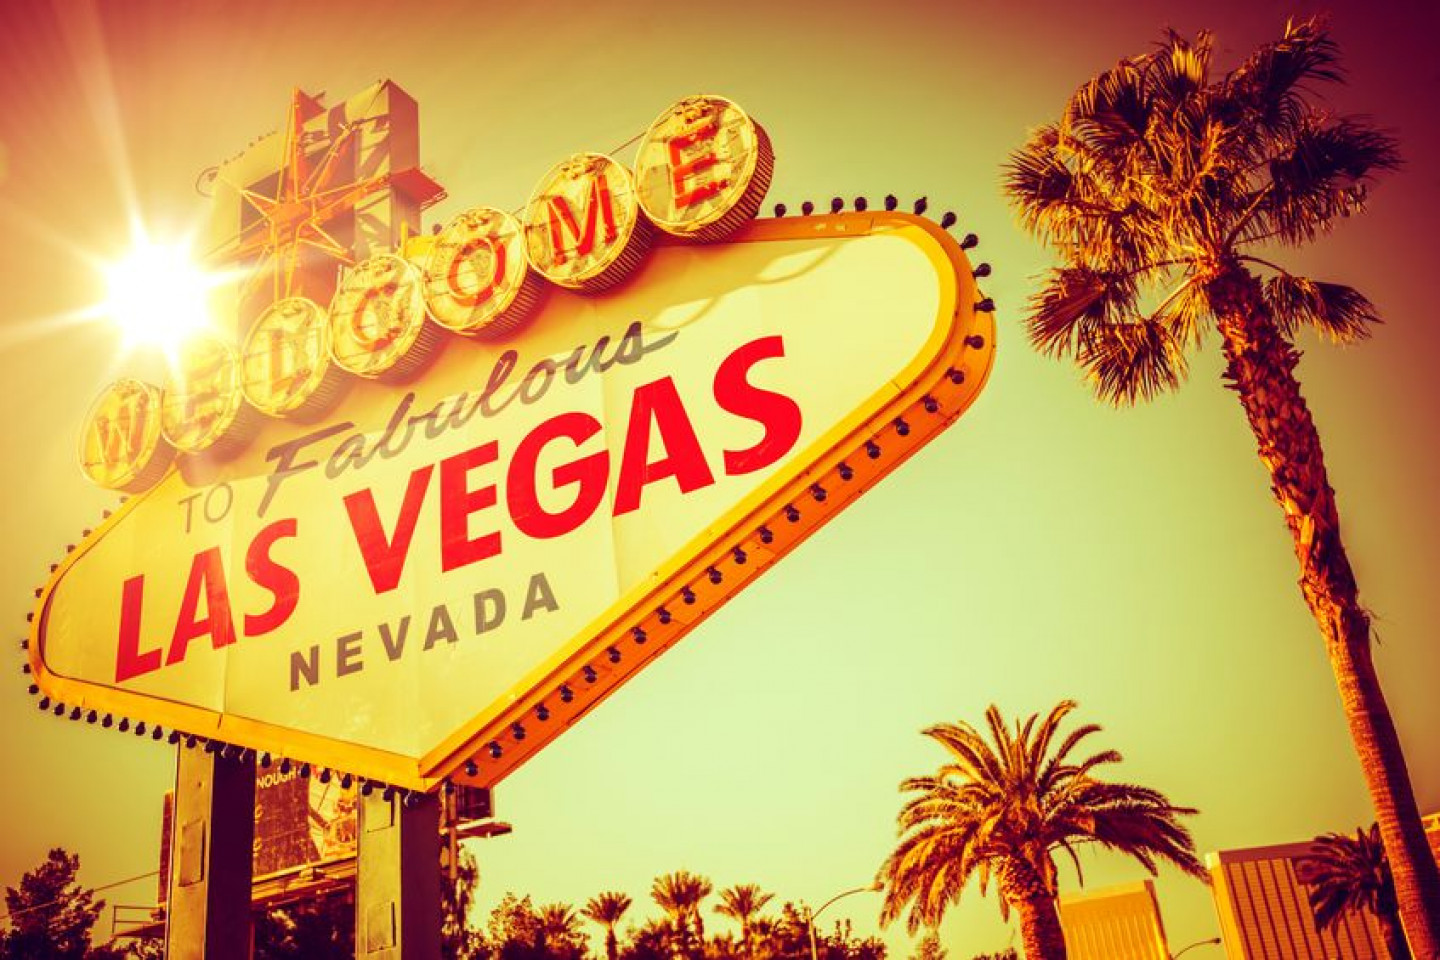 Las Vegas Casino host employee non-compete